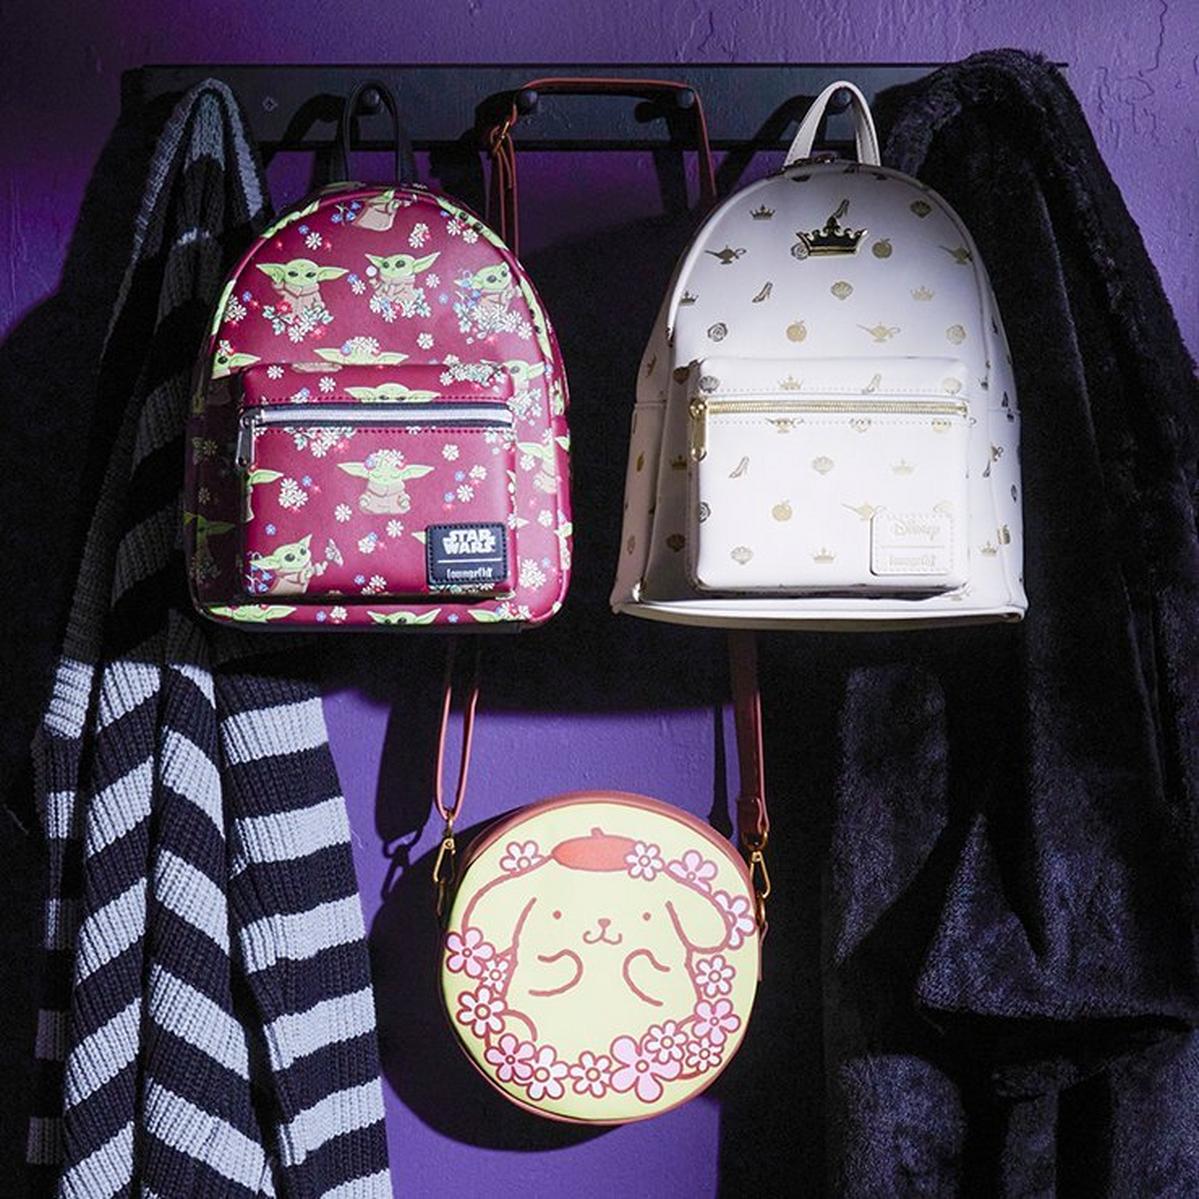 Backpack School Boy Game, Aphmau Merch Backpack, School Bag Game